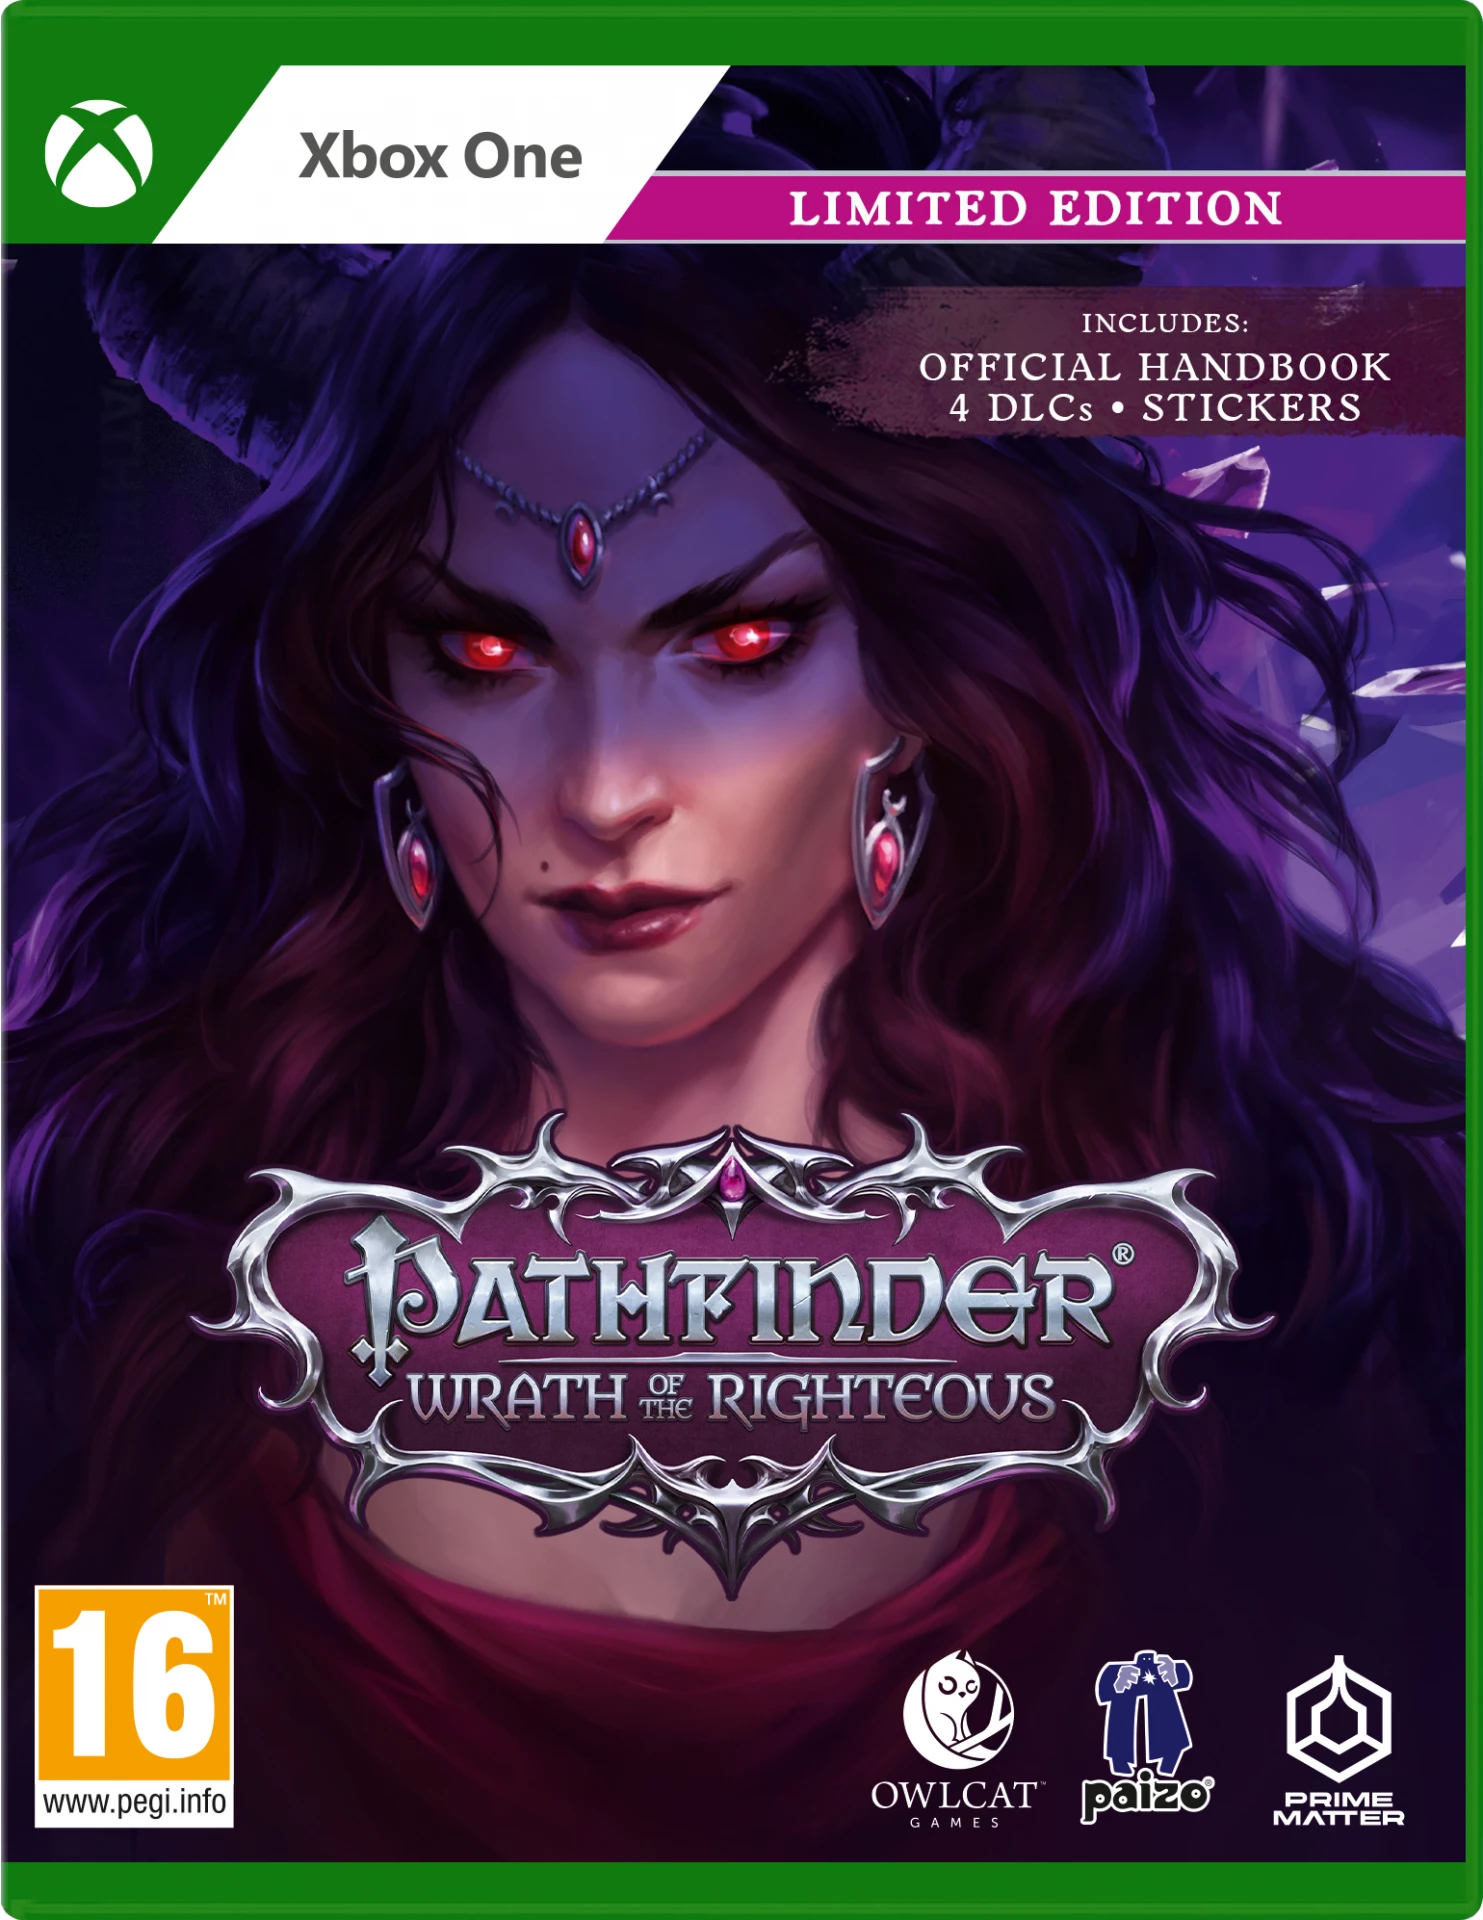 Pathfinder Wrath of the Righteous Limited Edition voor de Xbox One kopen op nedgame.nl